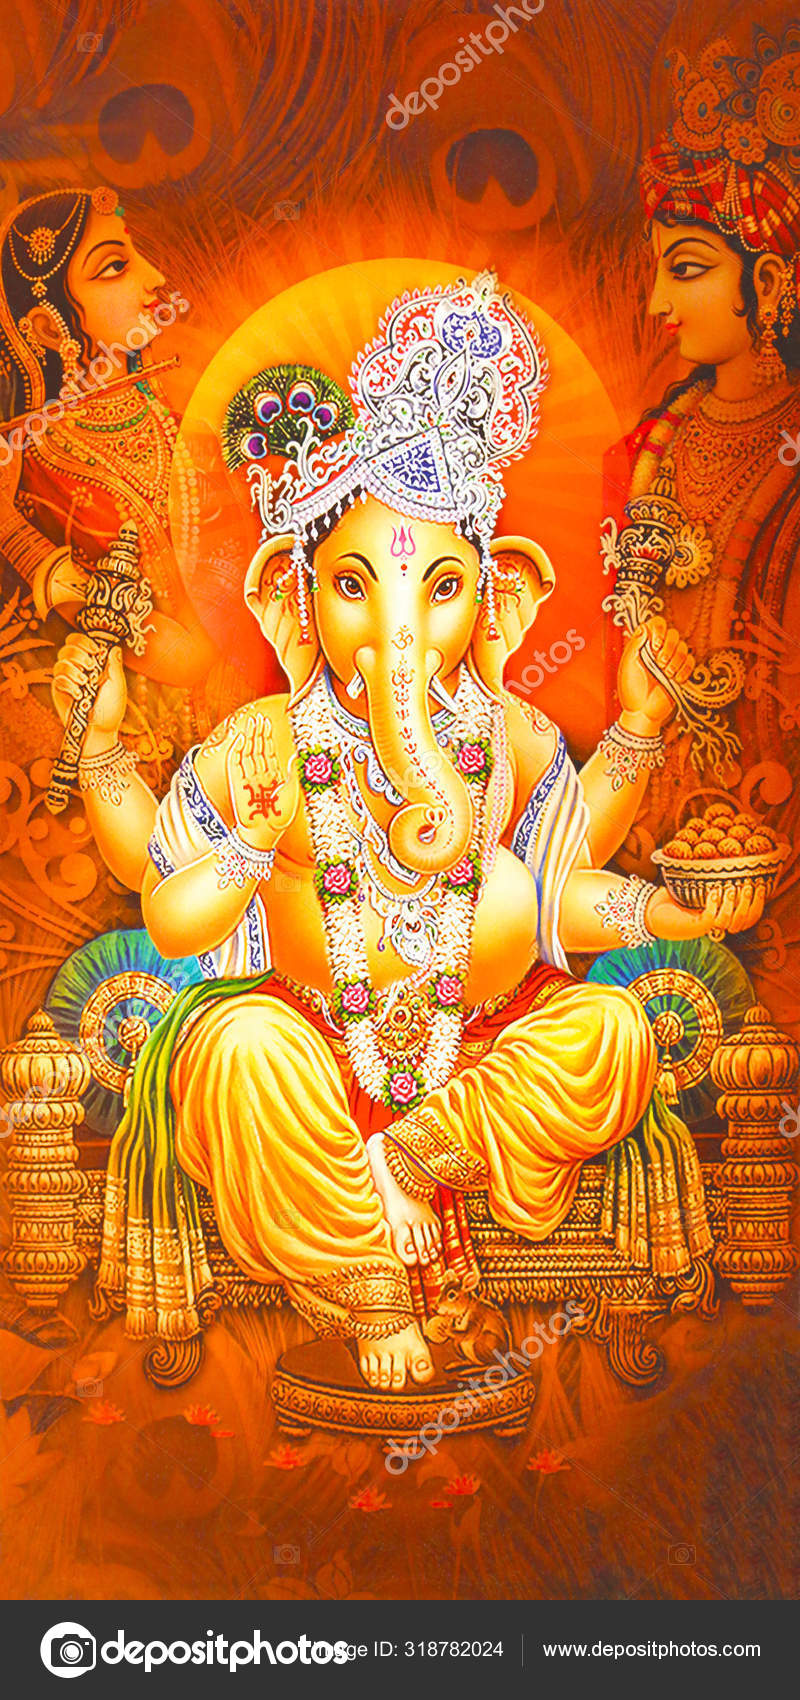 Hindu Lord Ganesha Texture Wallpaper Background Stock Photo by ...